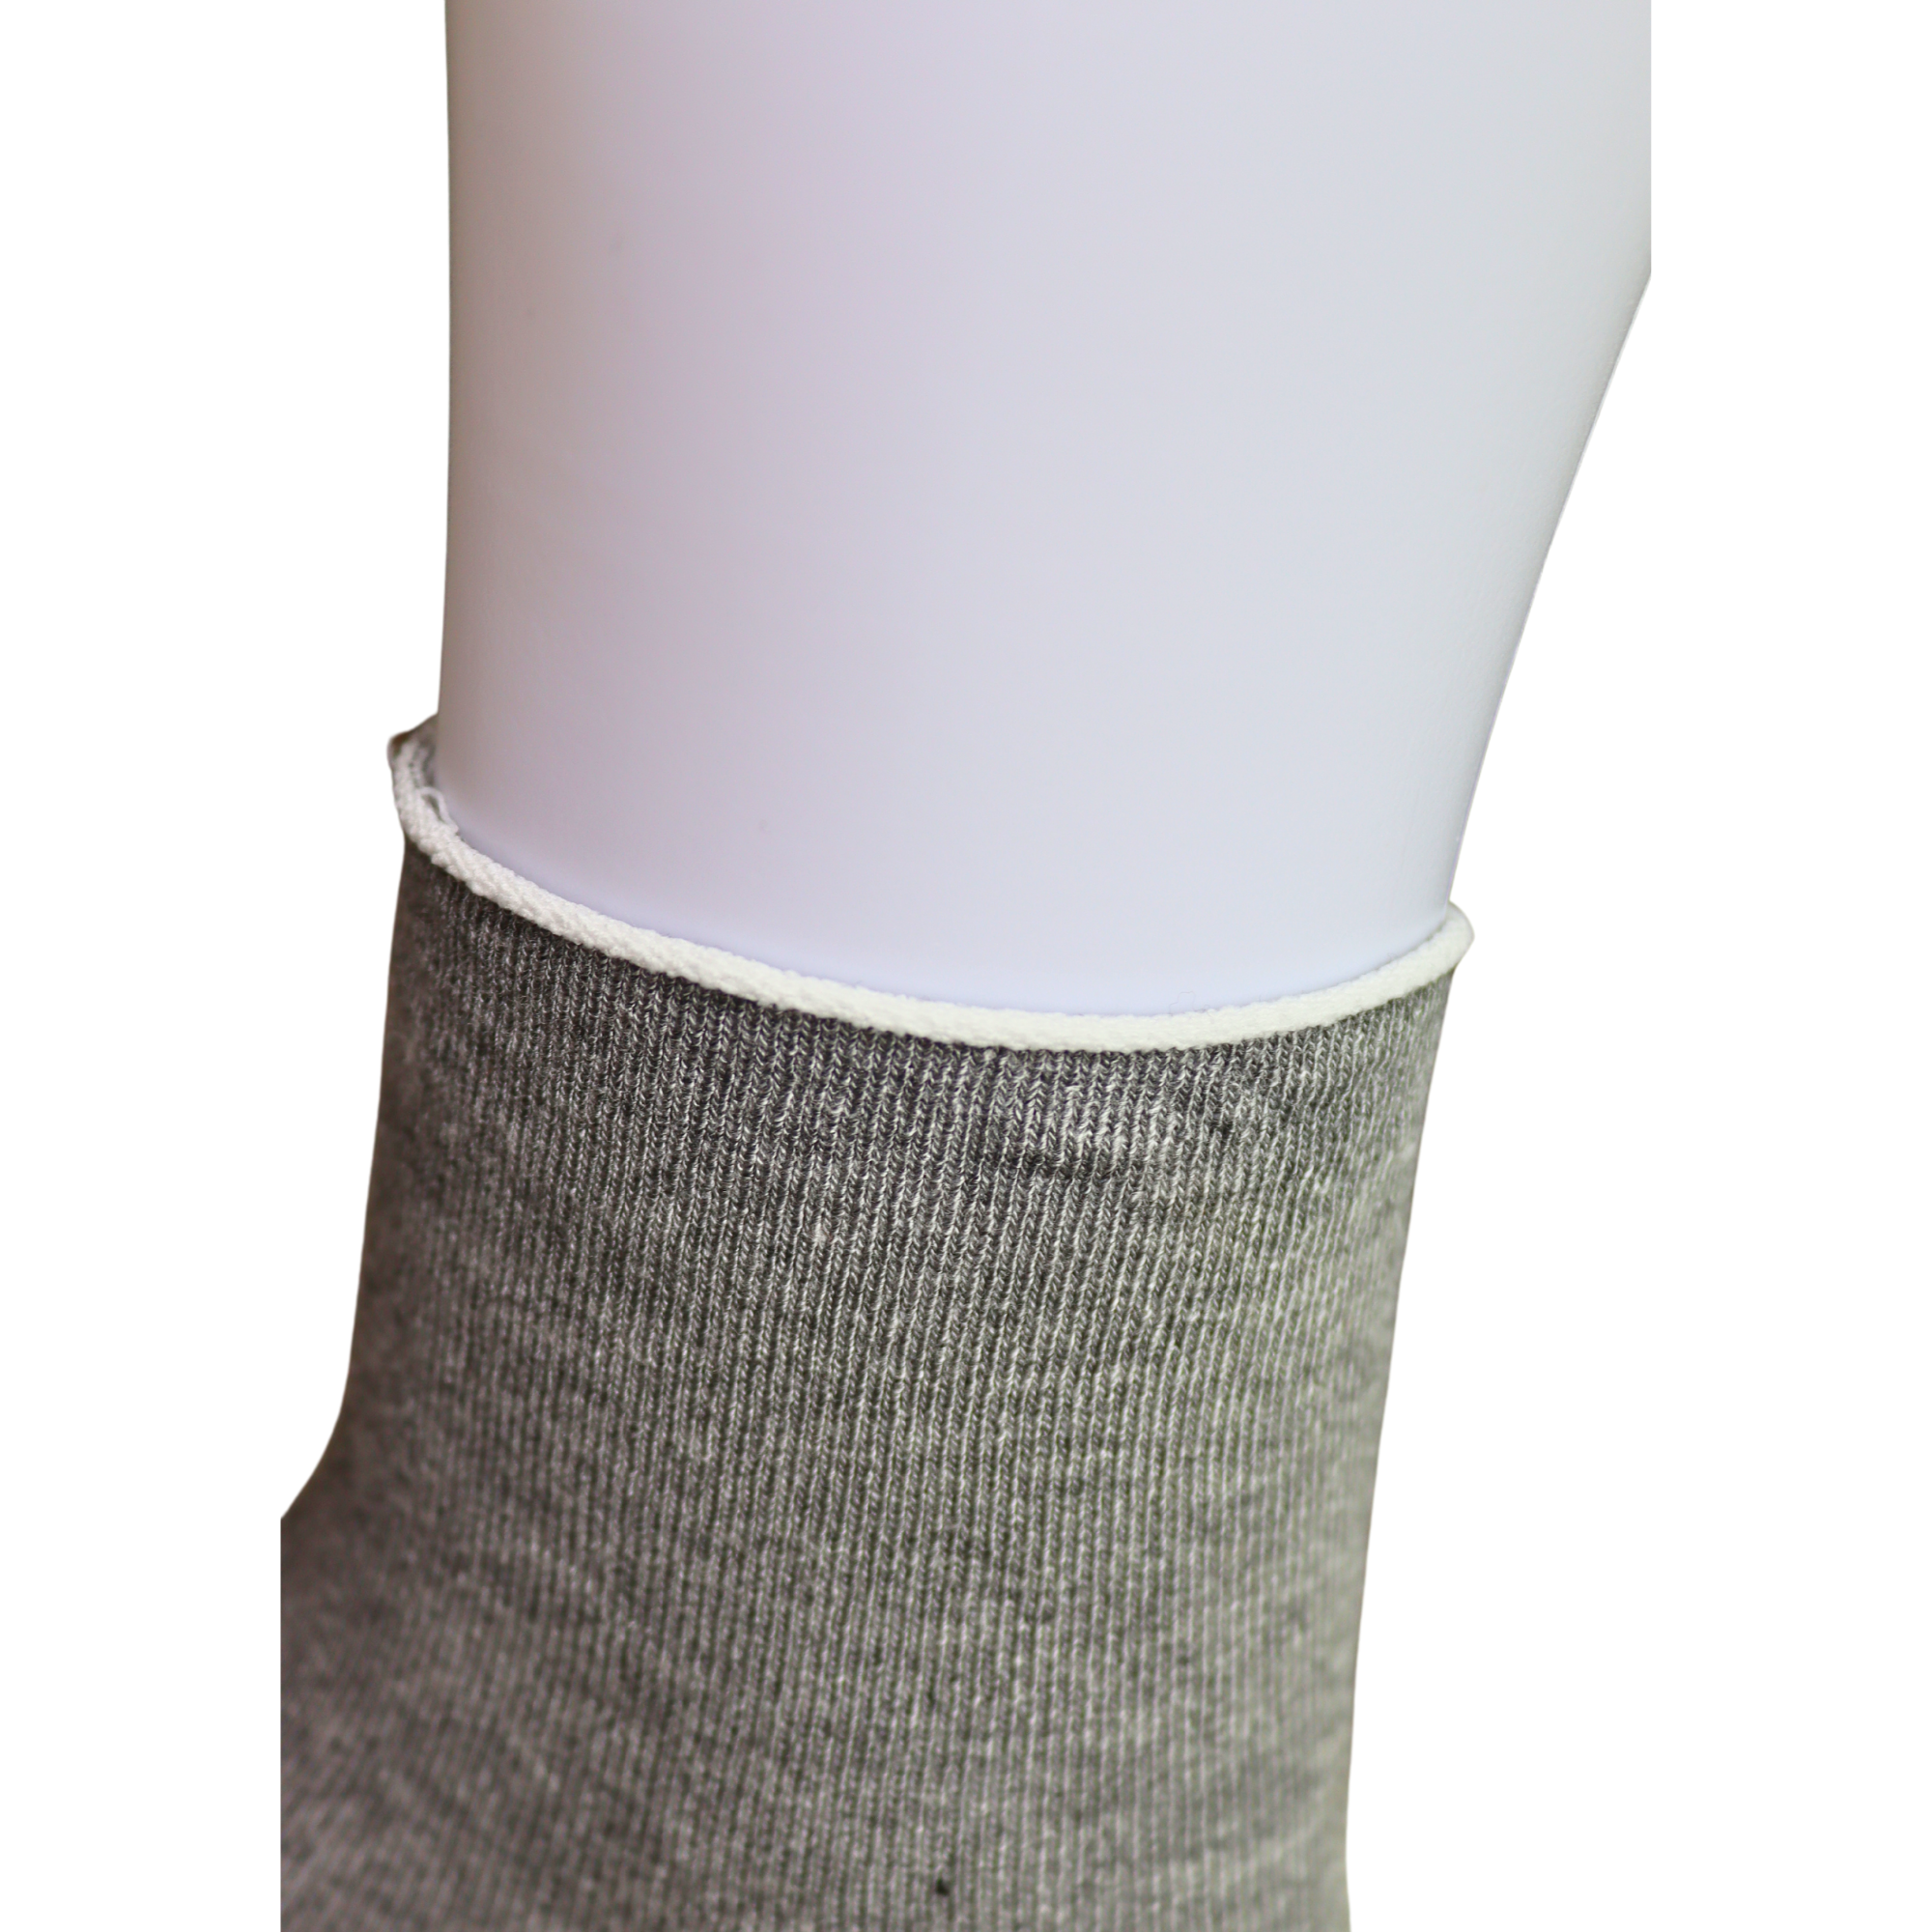 Louluu Women Grey Colour Bamboo Diabetic Ankle Socks